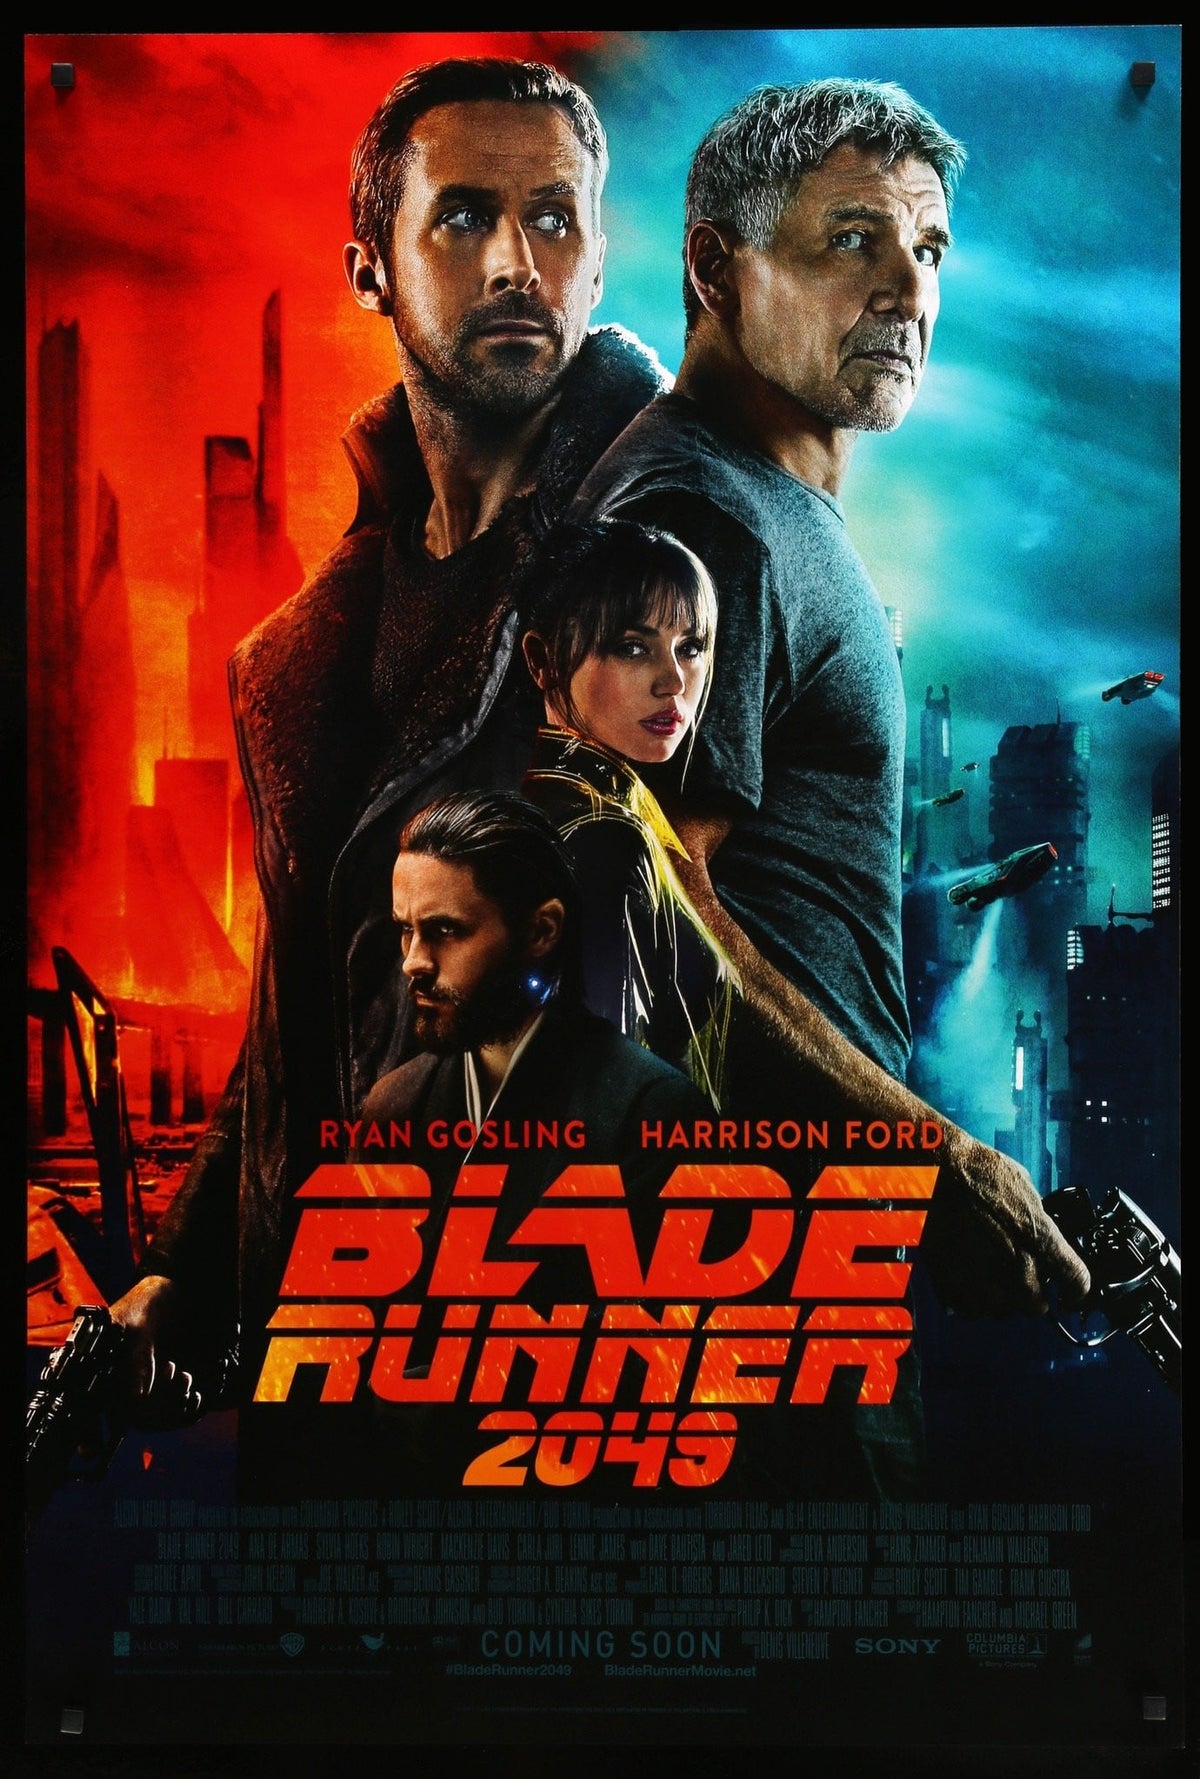 Blade Runner 2049 (2017) original movie poster for sale at Original Film Art